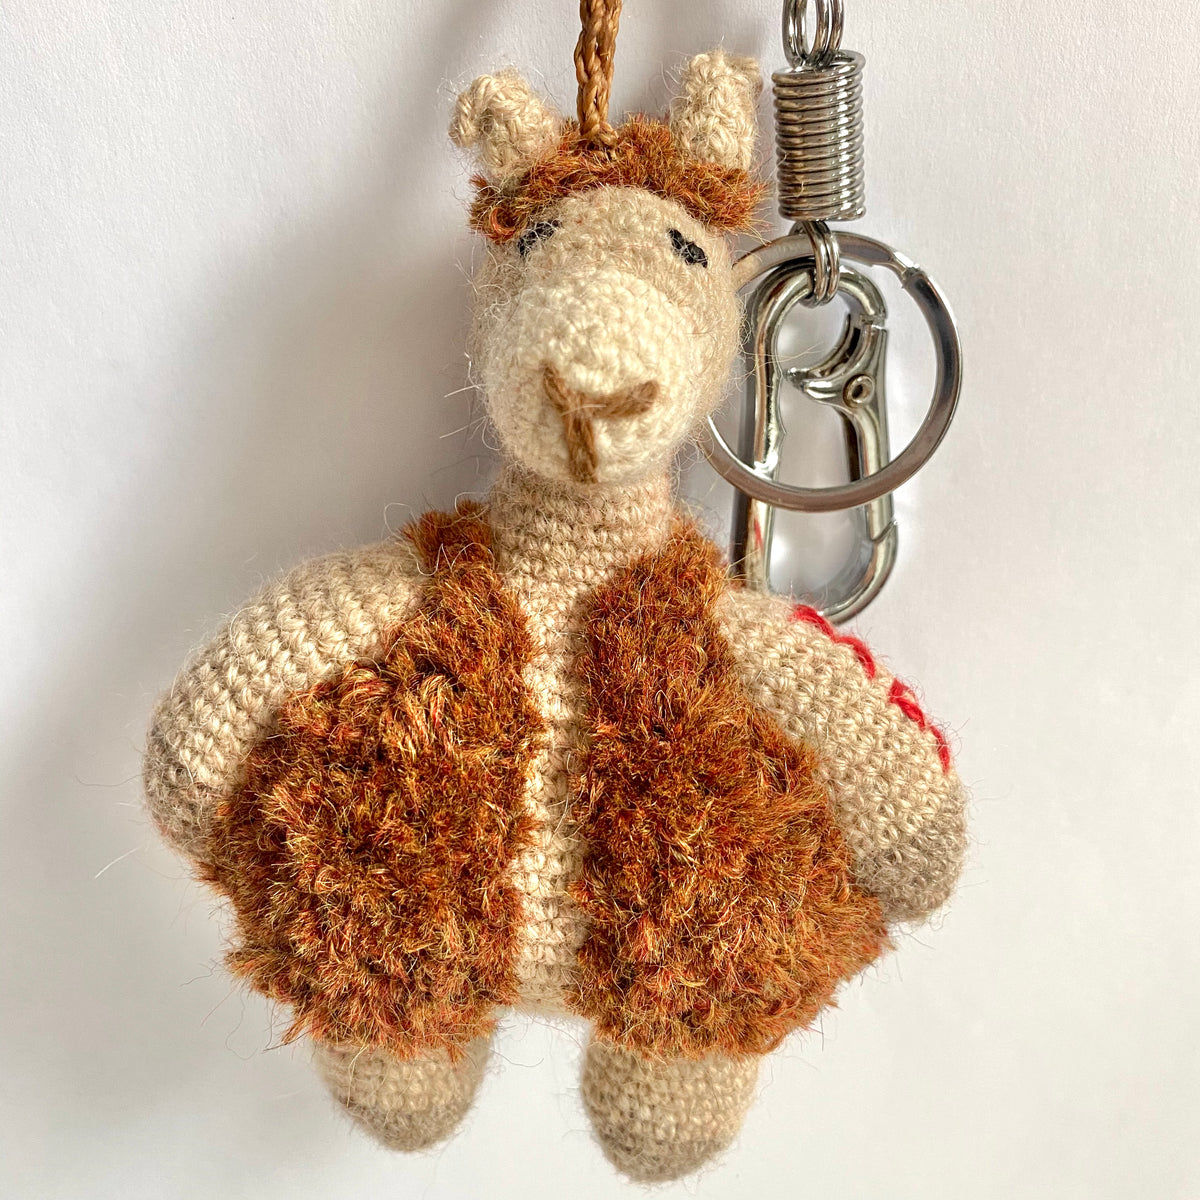 YAPA Crochet Alpaca Keychain & Bag Charm White